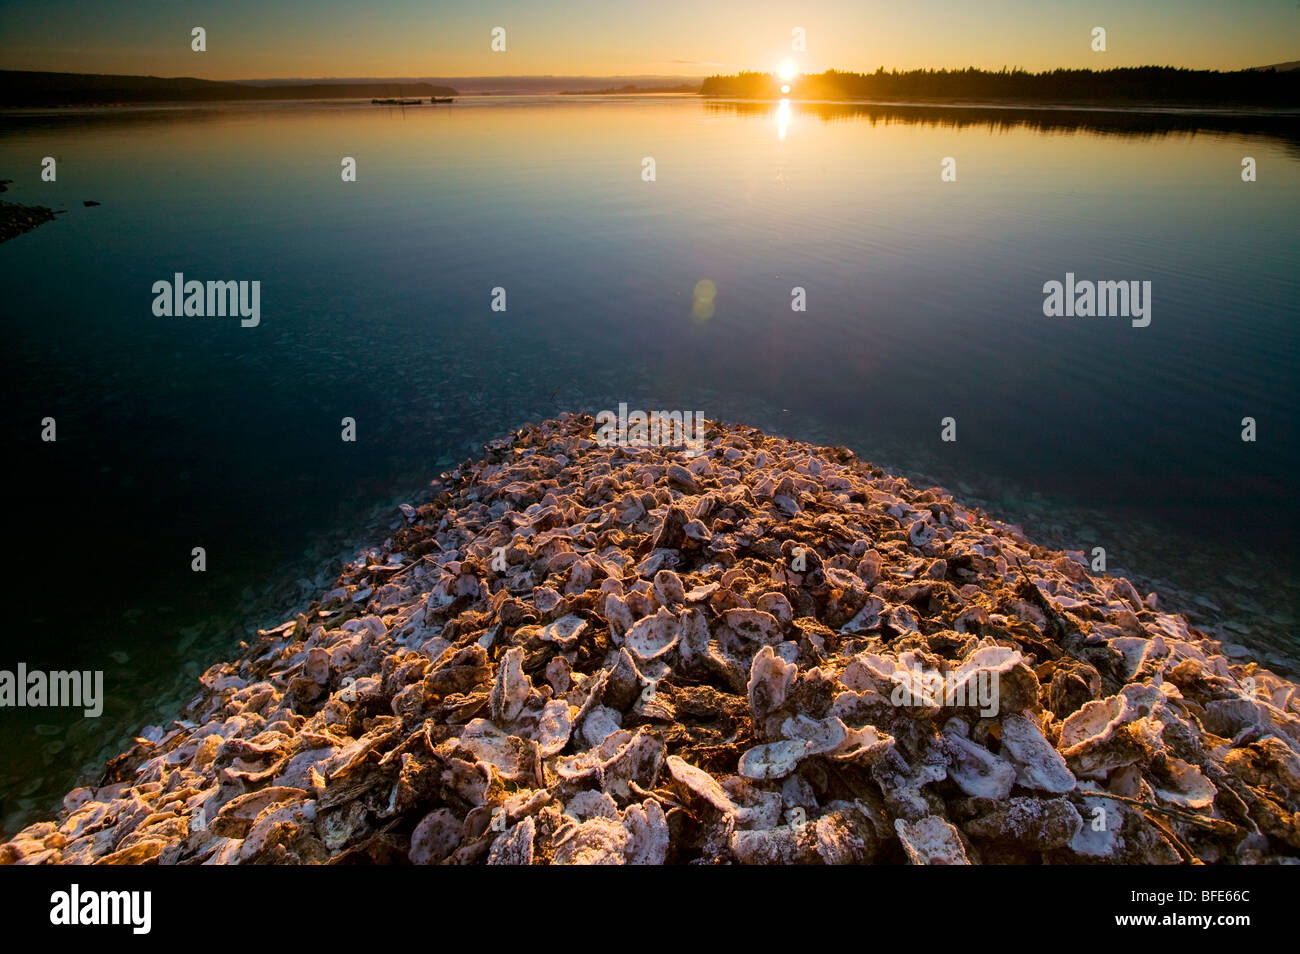 Shucked oyster shell, Fanny Bay, Vancouver Island, British Columbia, Canada Stock Photo